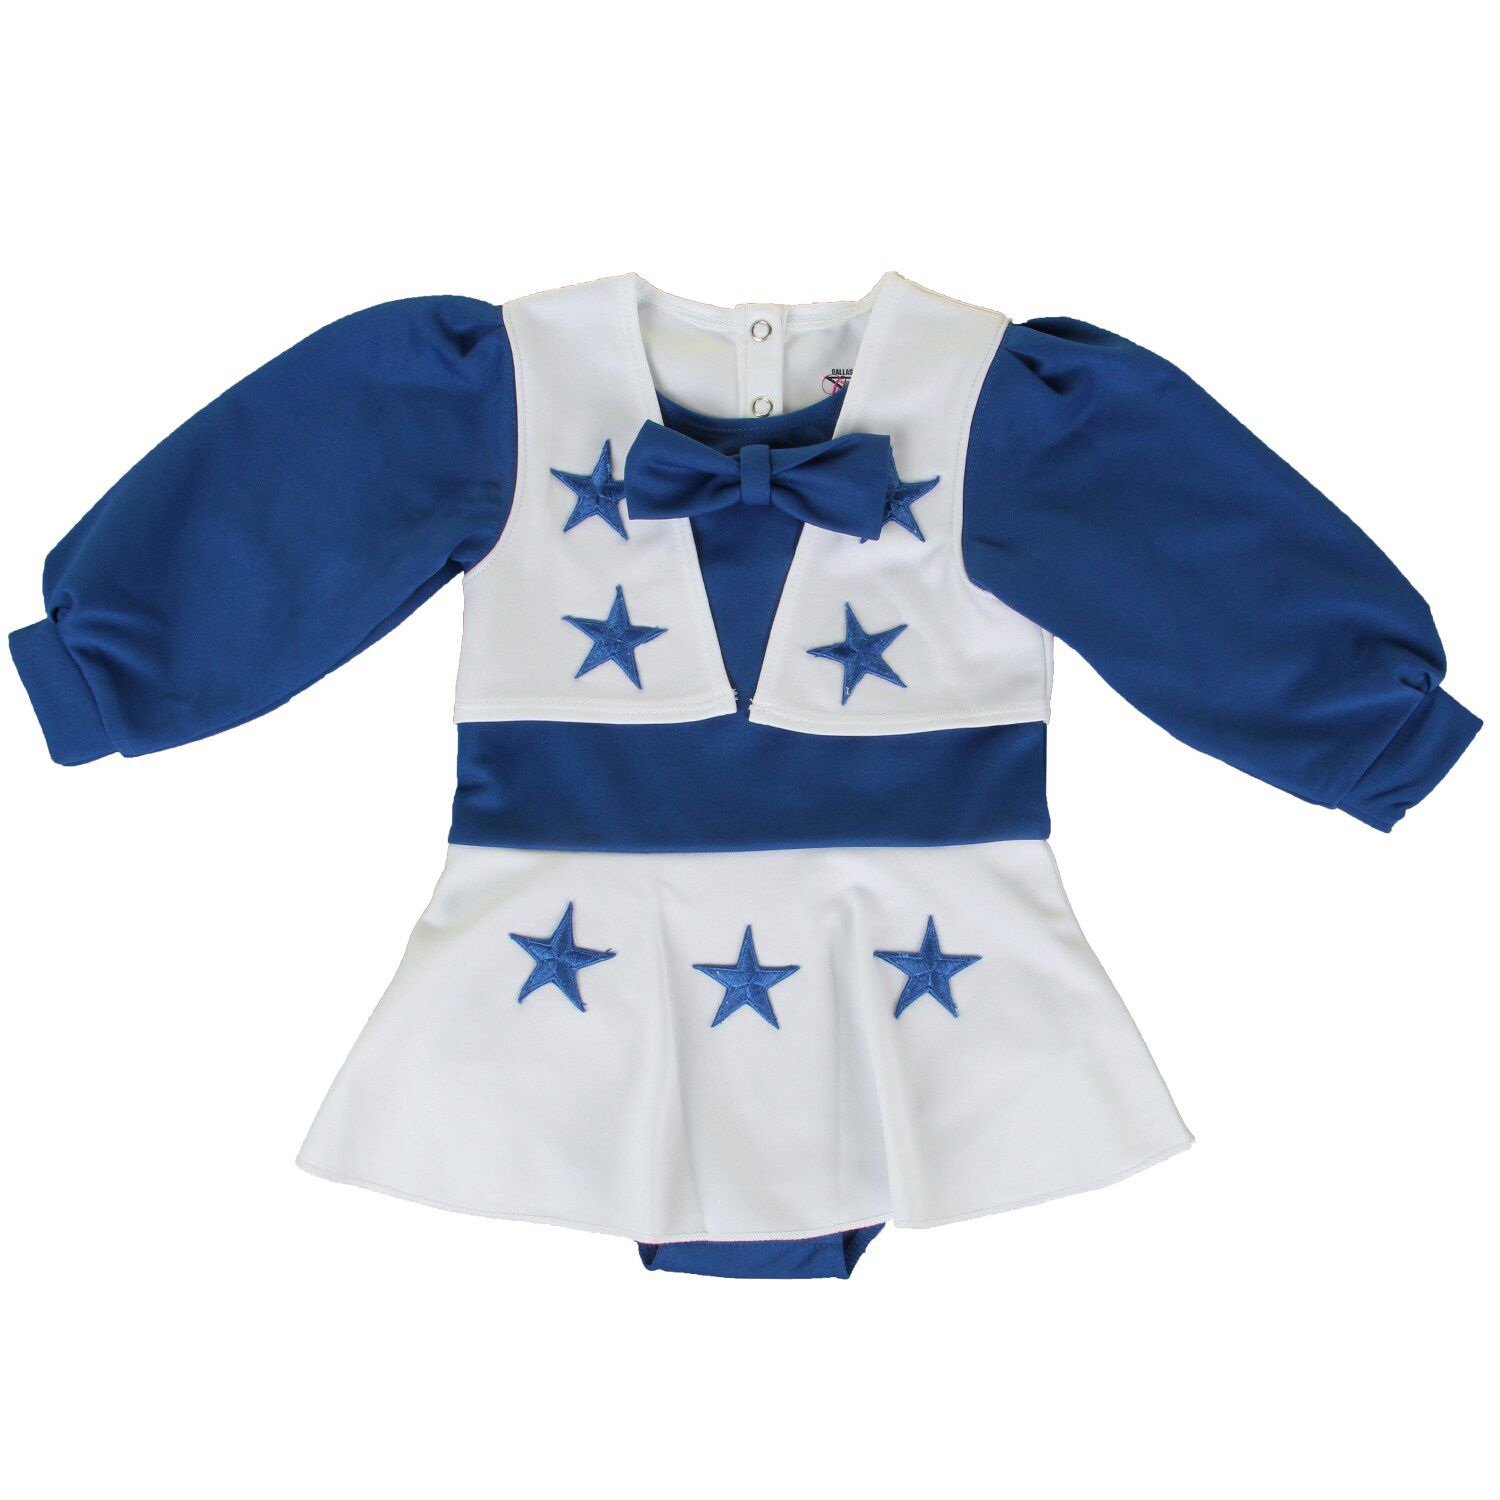 baby cheer uniform